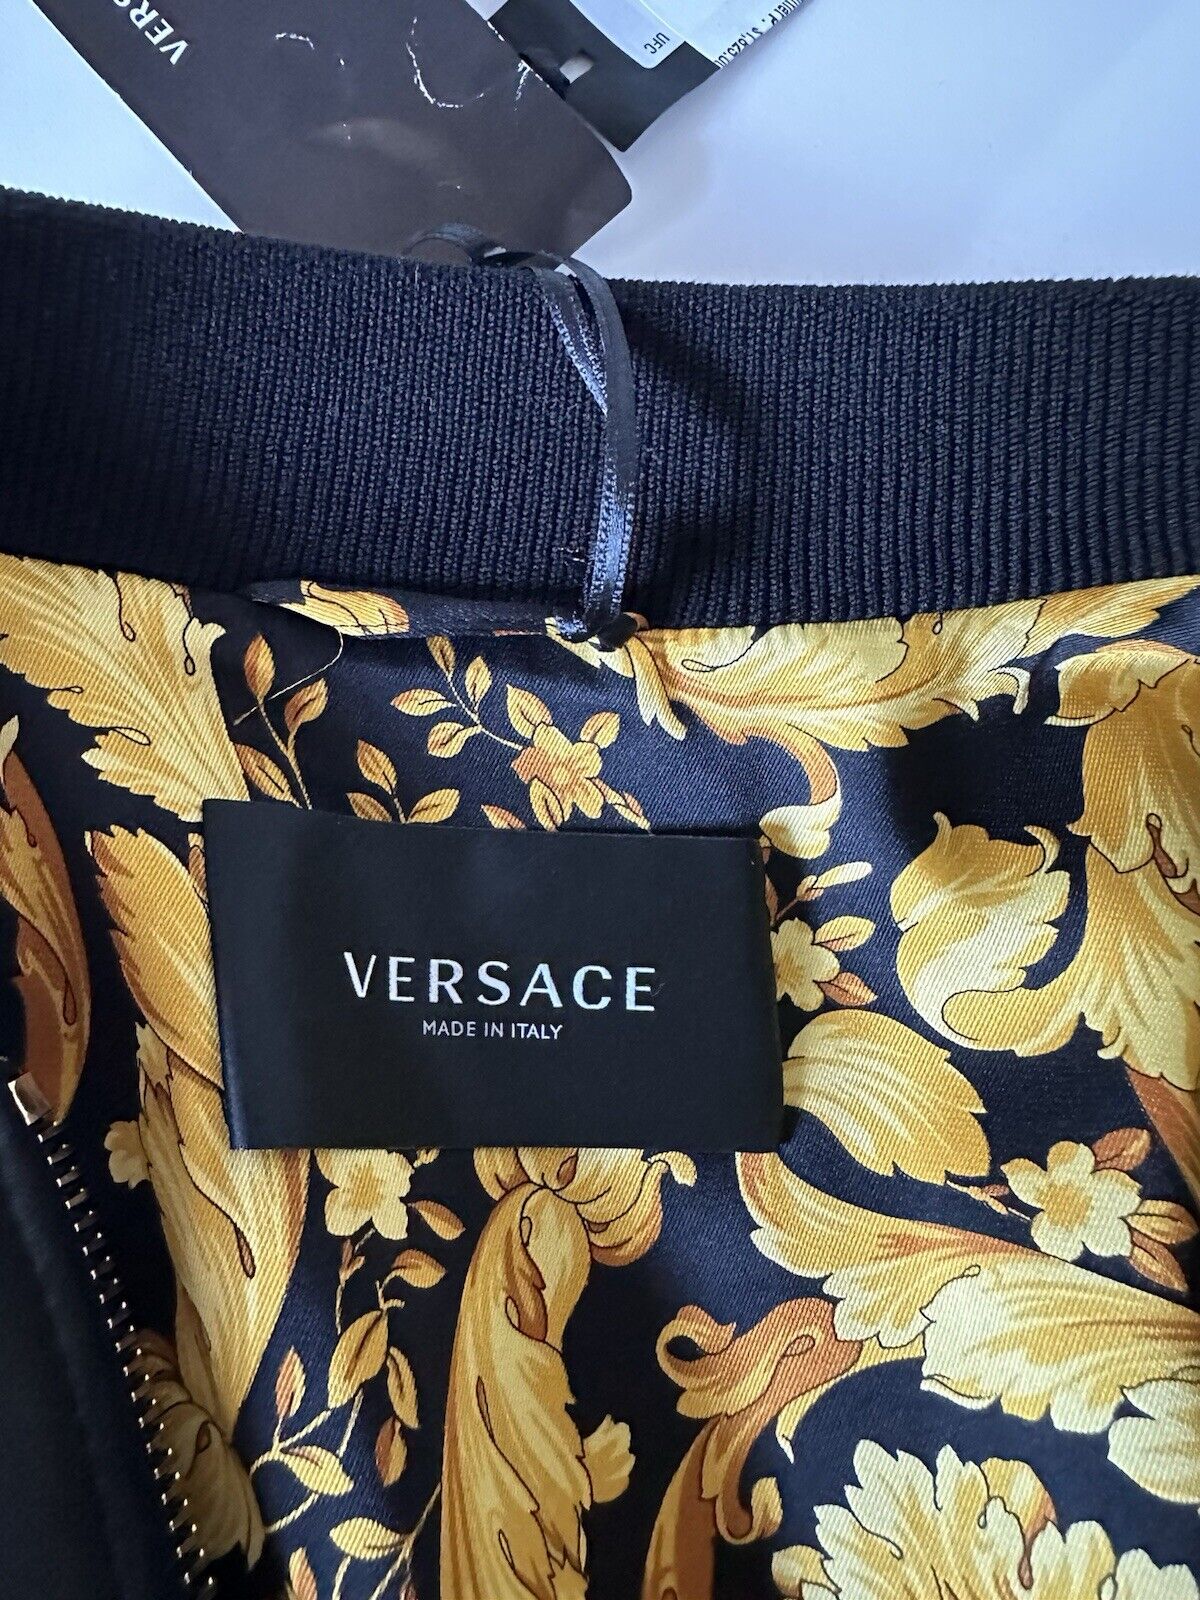 Versace Men's Calf Leather Heavy Jacket Black 42 US (52 Eu) IT NWT $3625 1007634